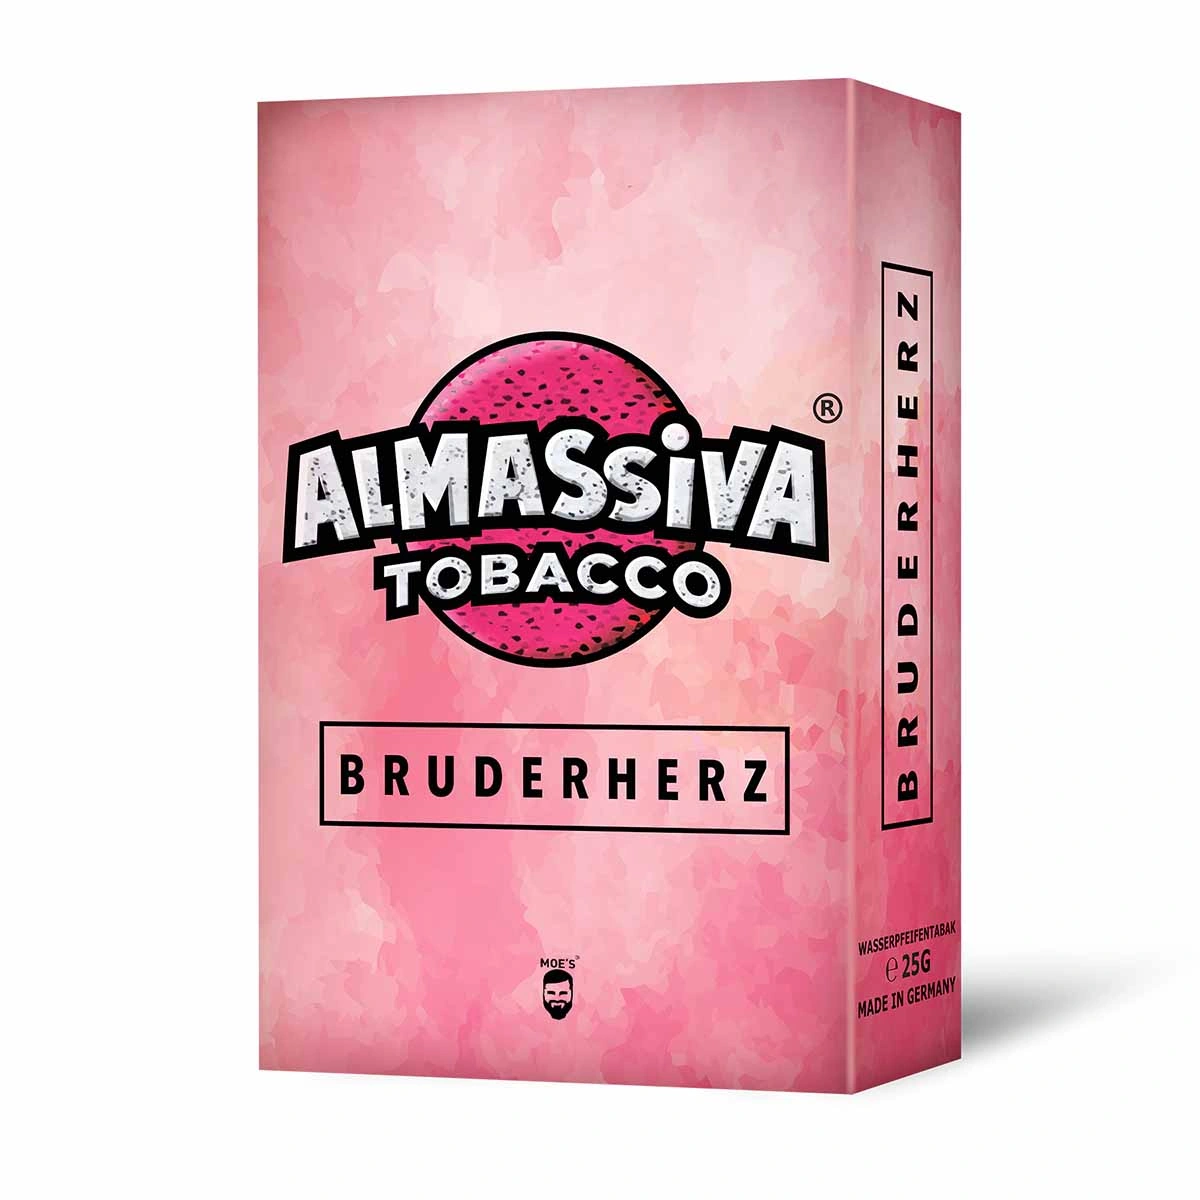 Al Massiva Tobacco 25g Bruderherz